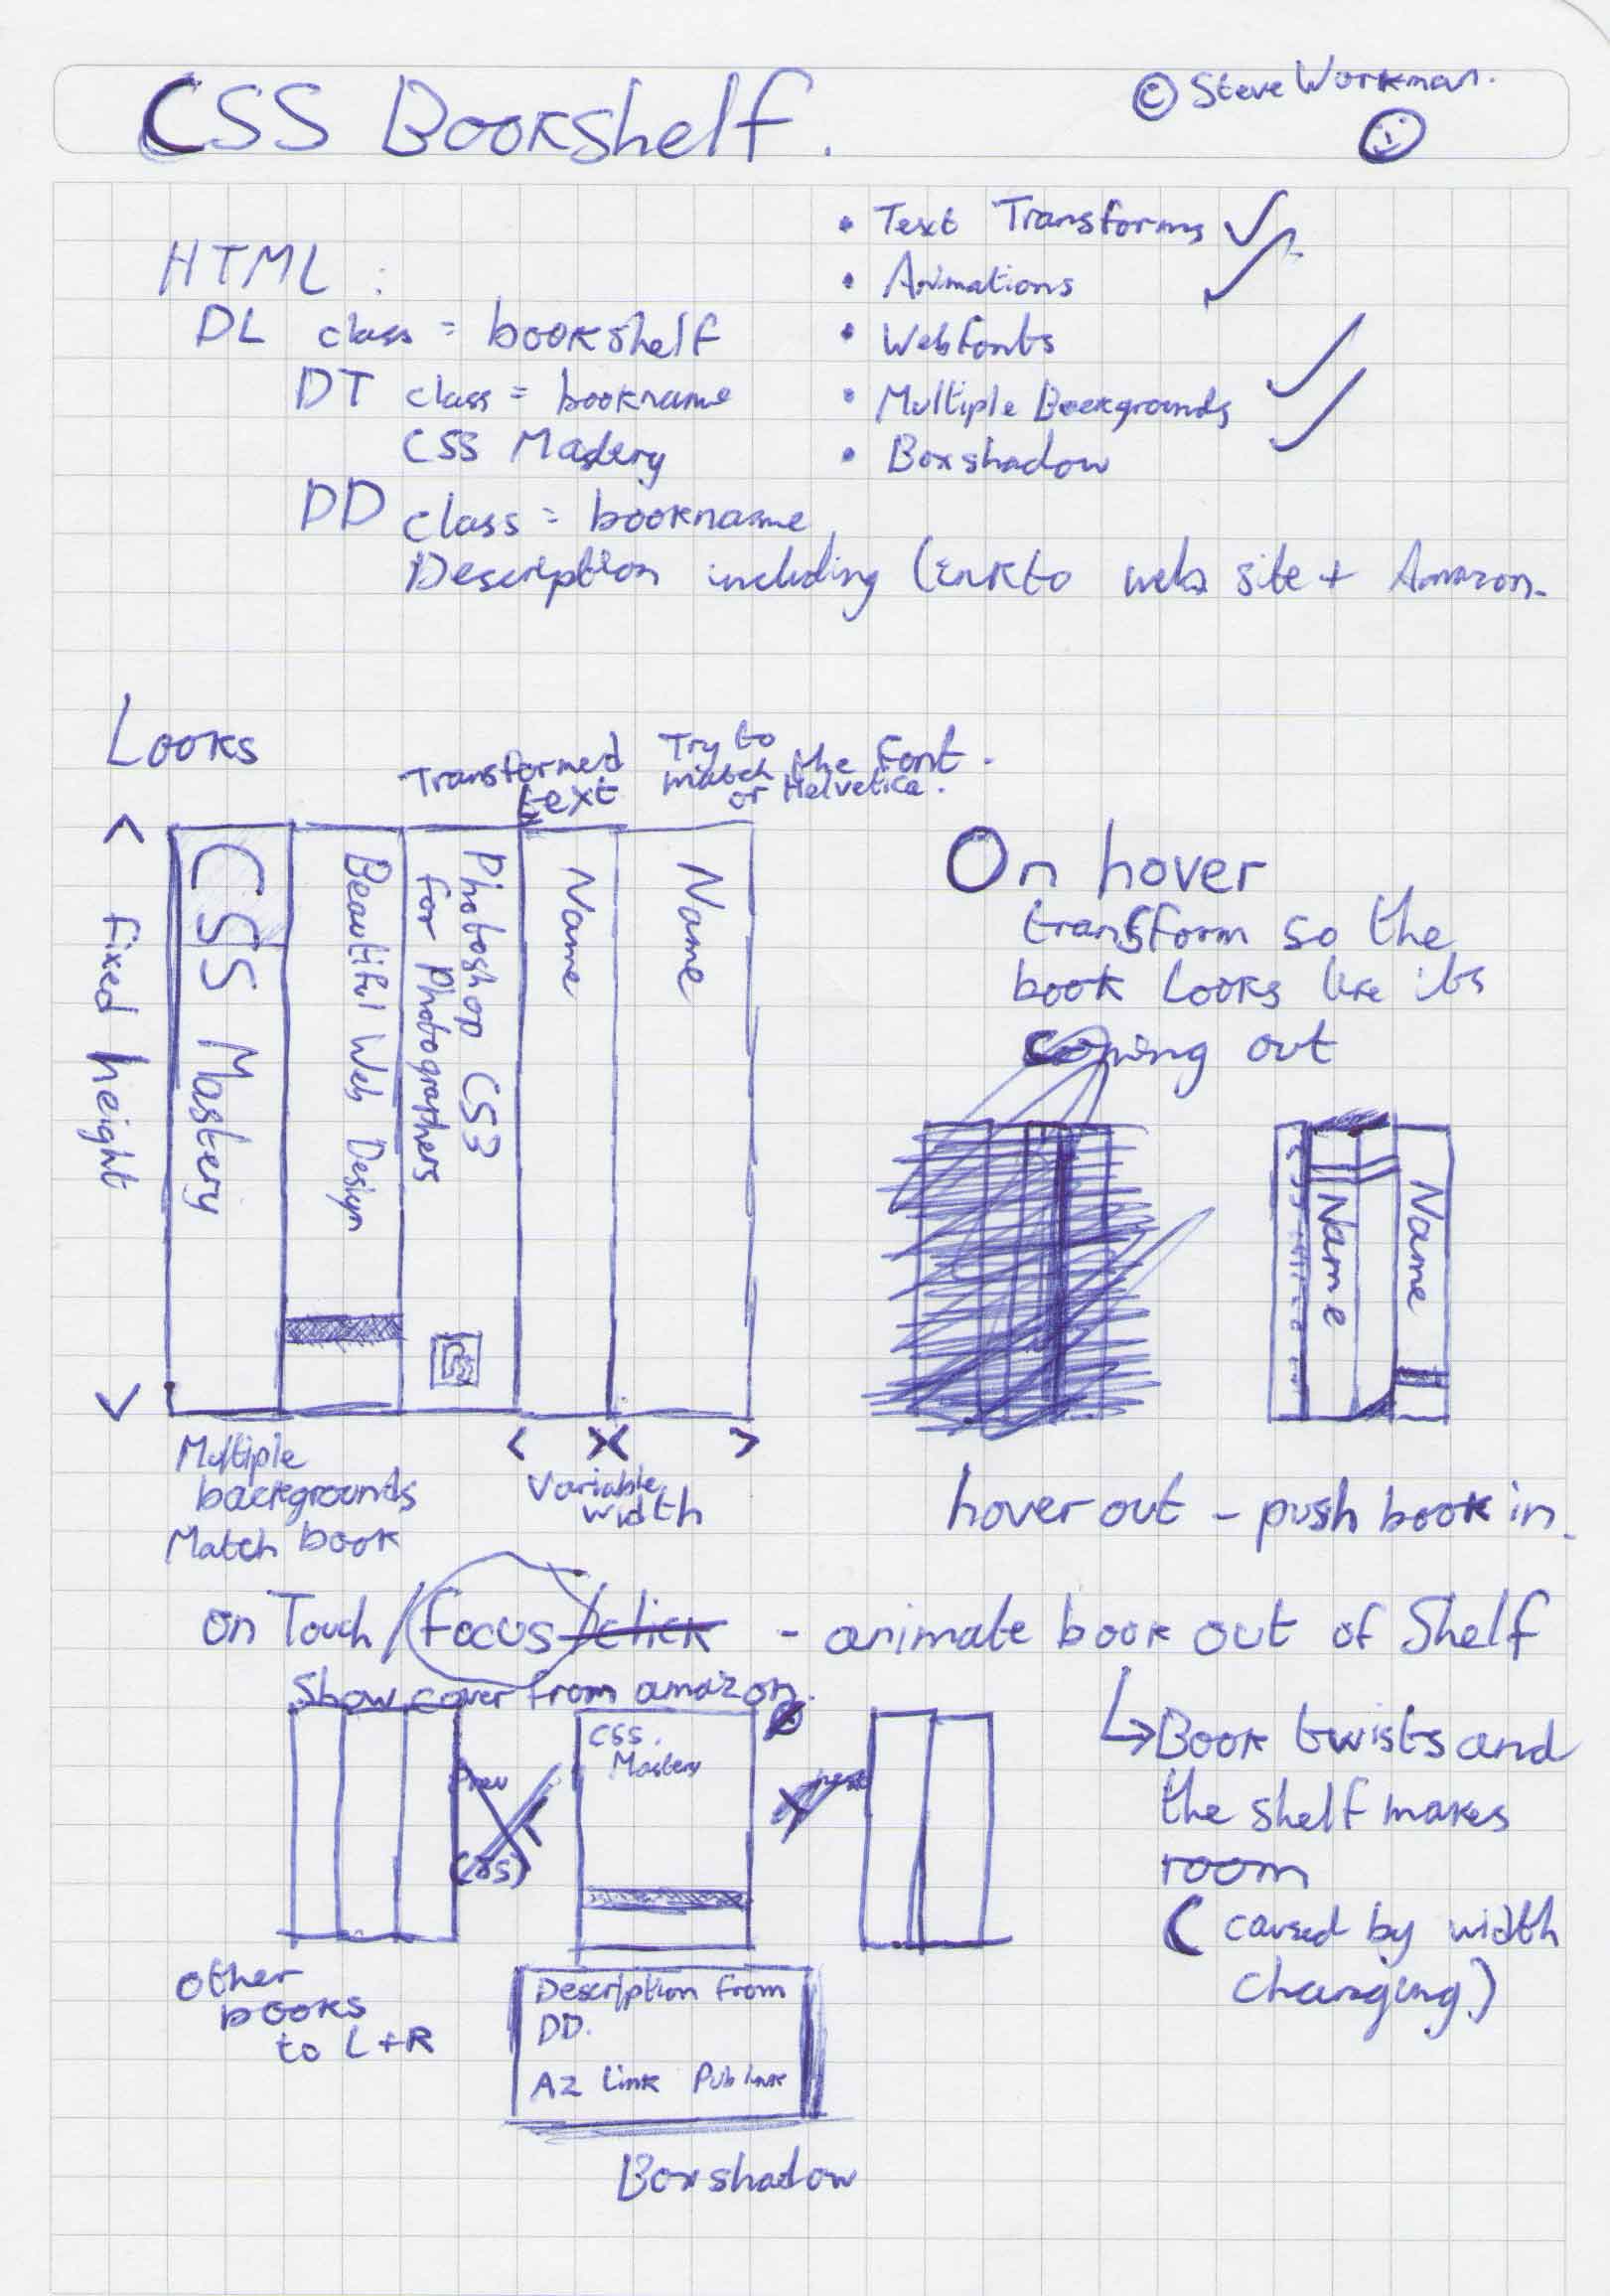 CSS3 bookshelf sketch